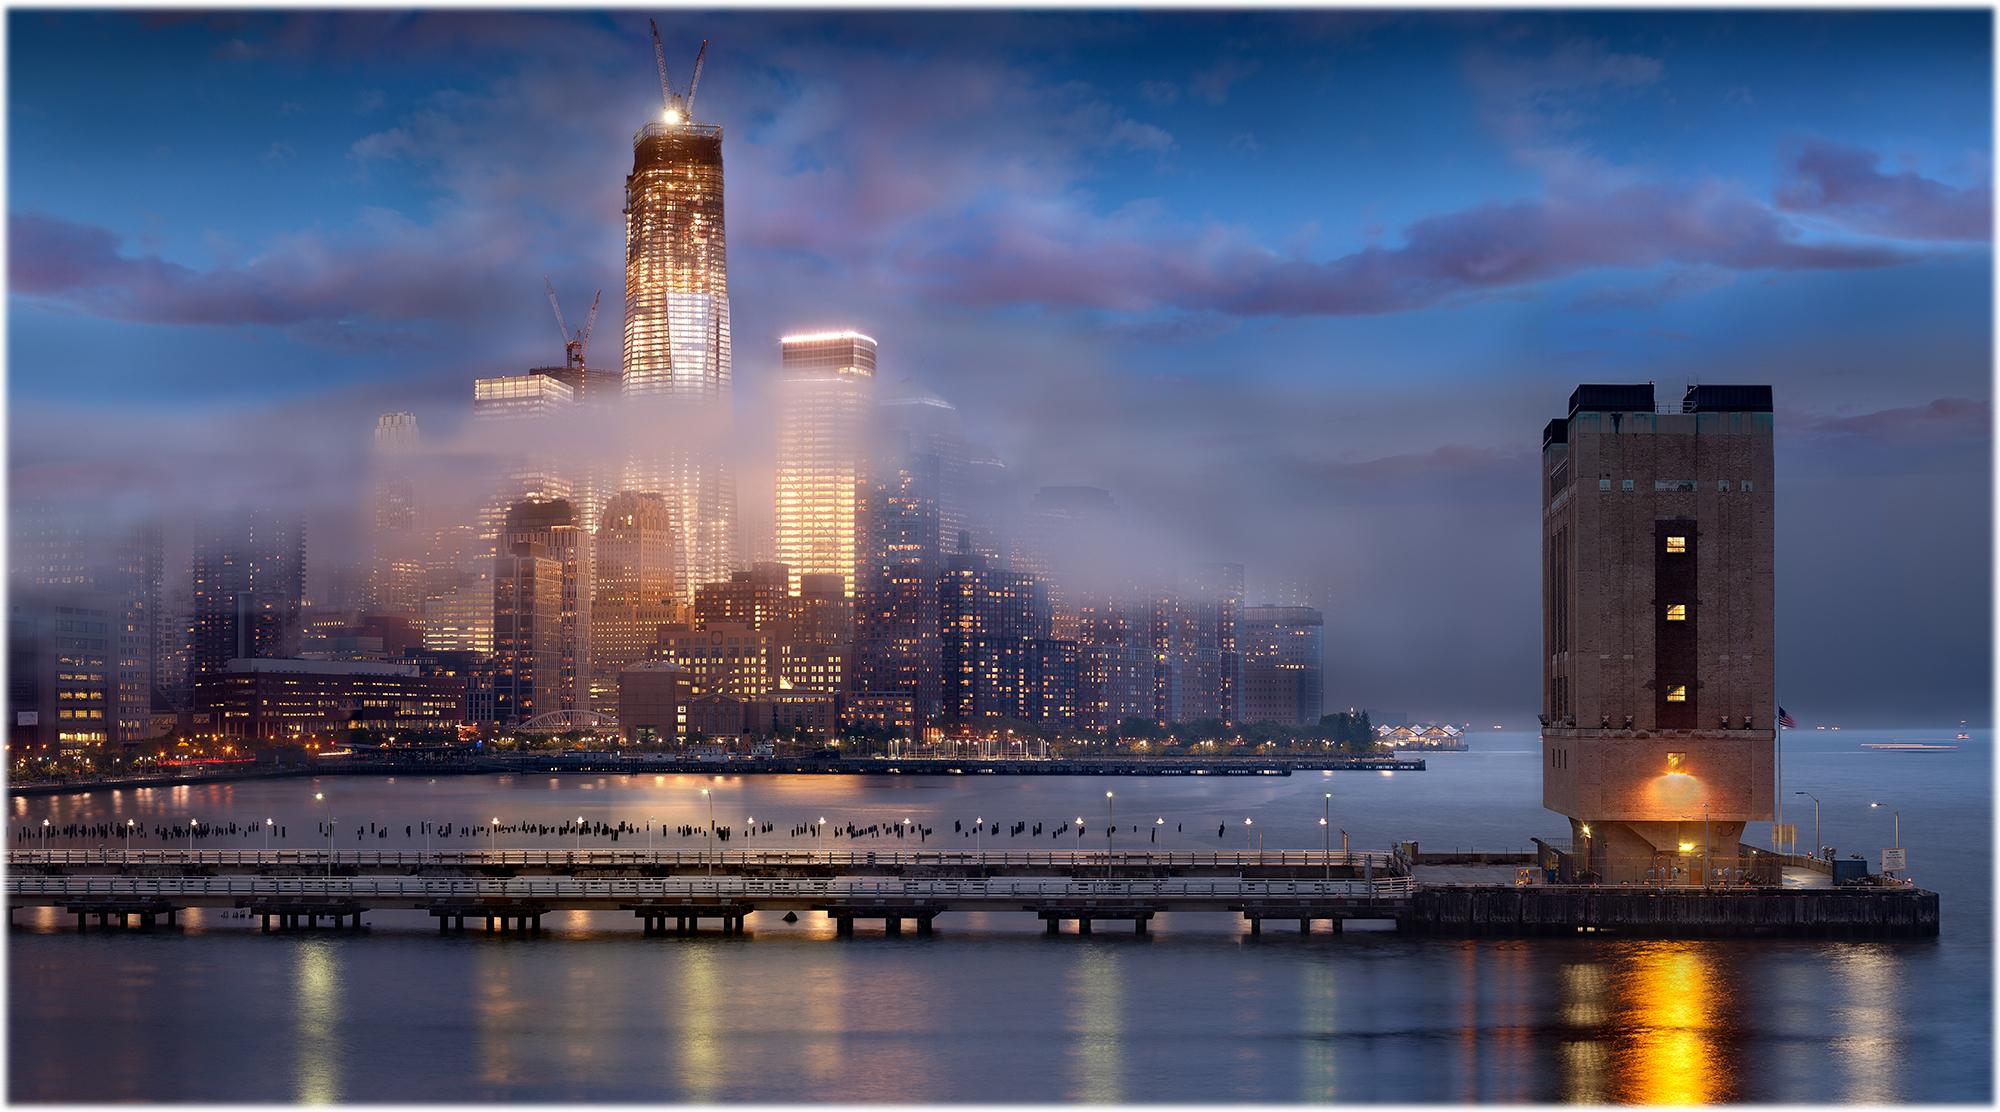 James Bleecker Color Photograph – One World Trade Center 11 (Panoramiklandschaft mit Farbdruck des Freedom Tower)